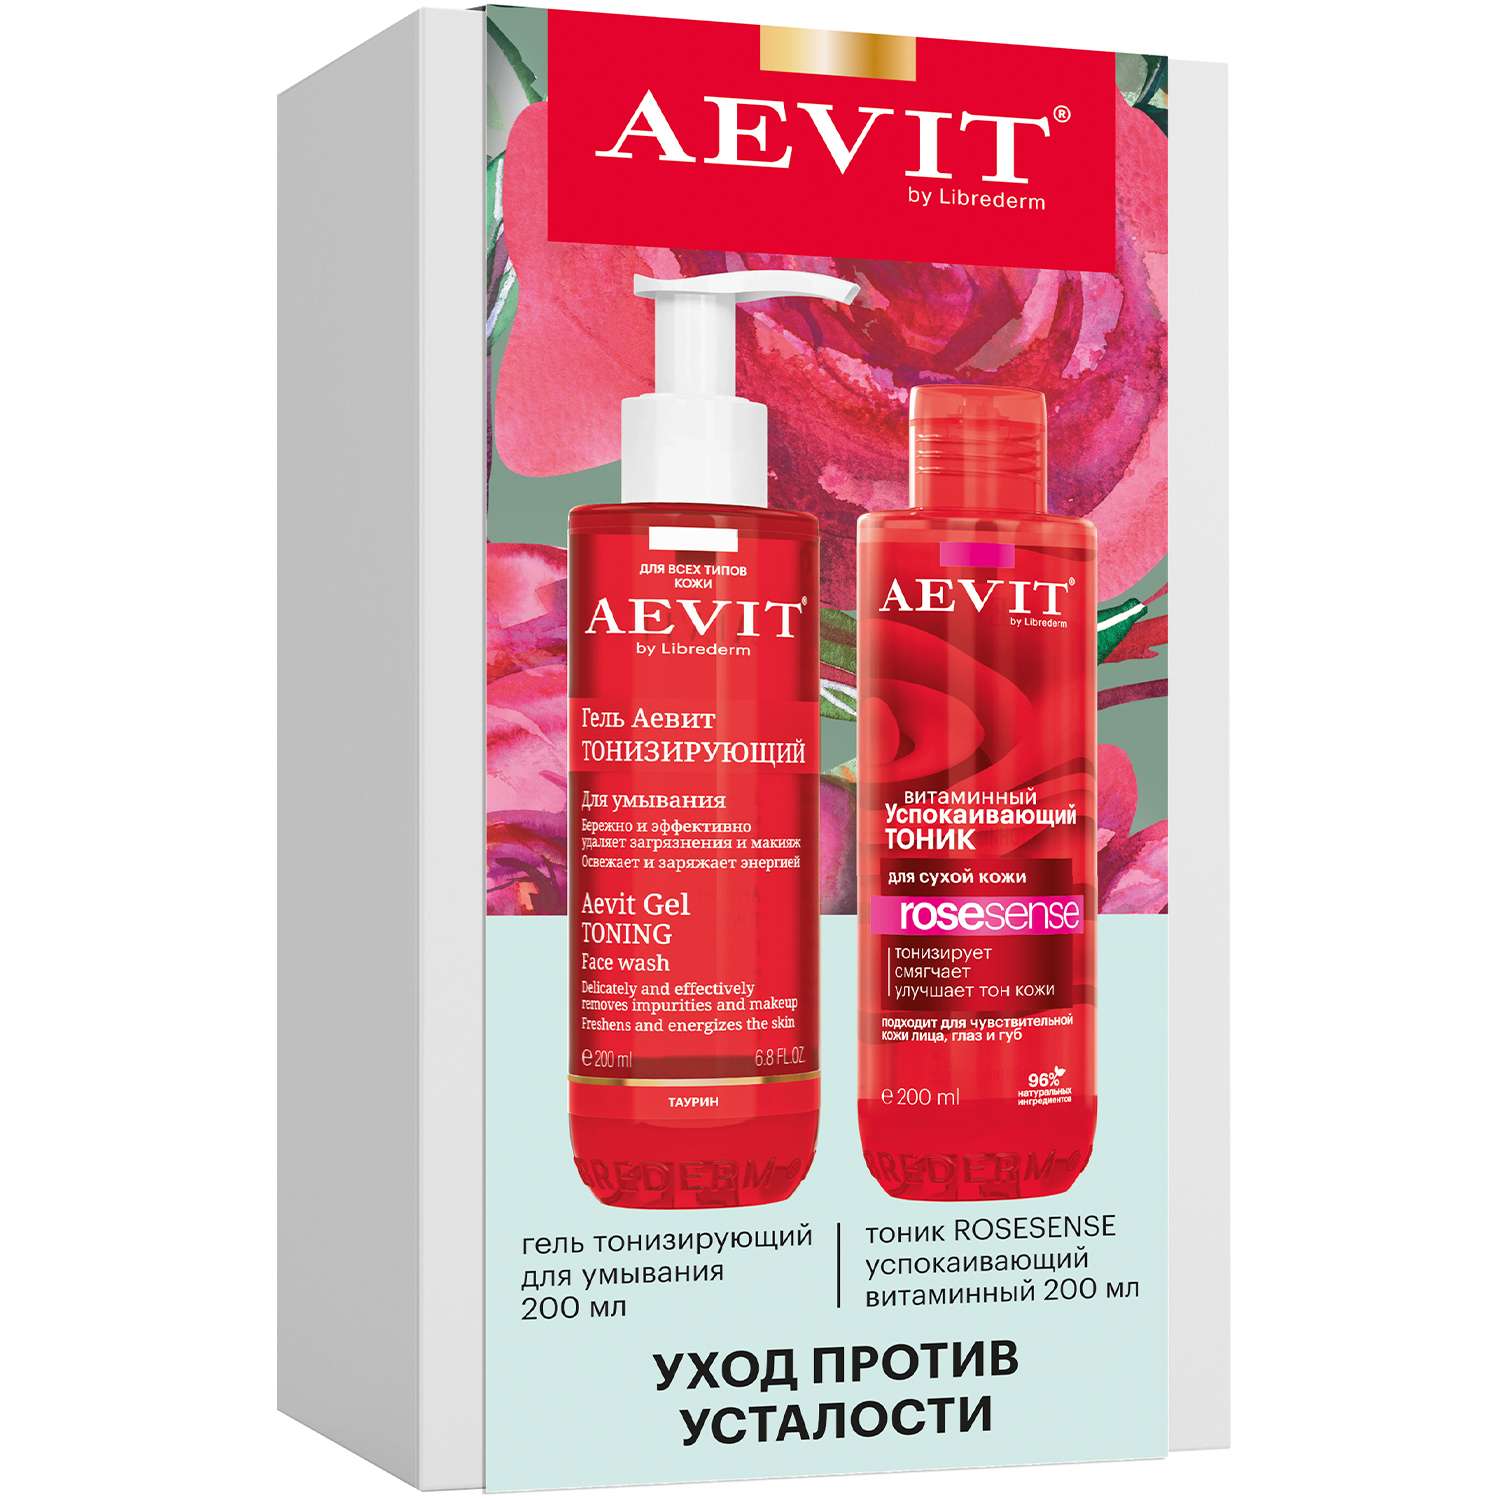 Набор AEVIT Уход против усталости кожи лица - фото 1